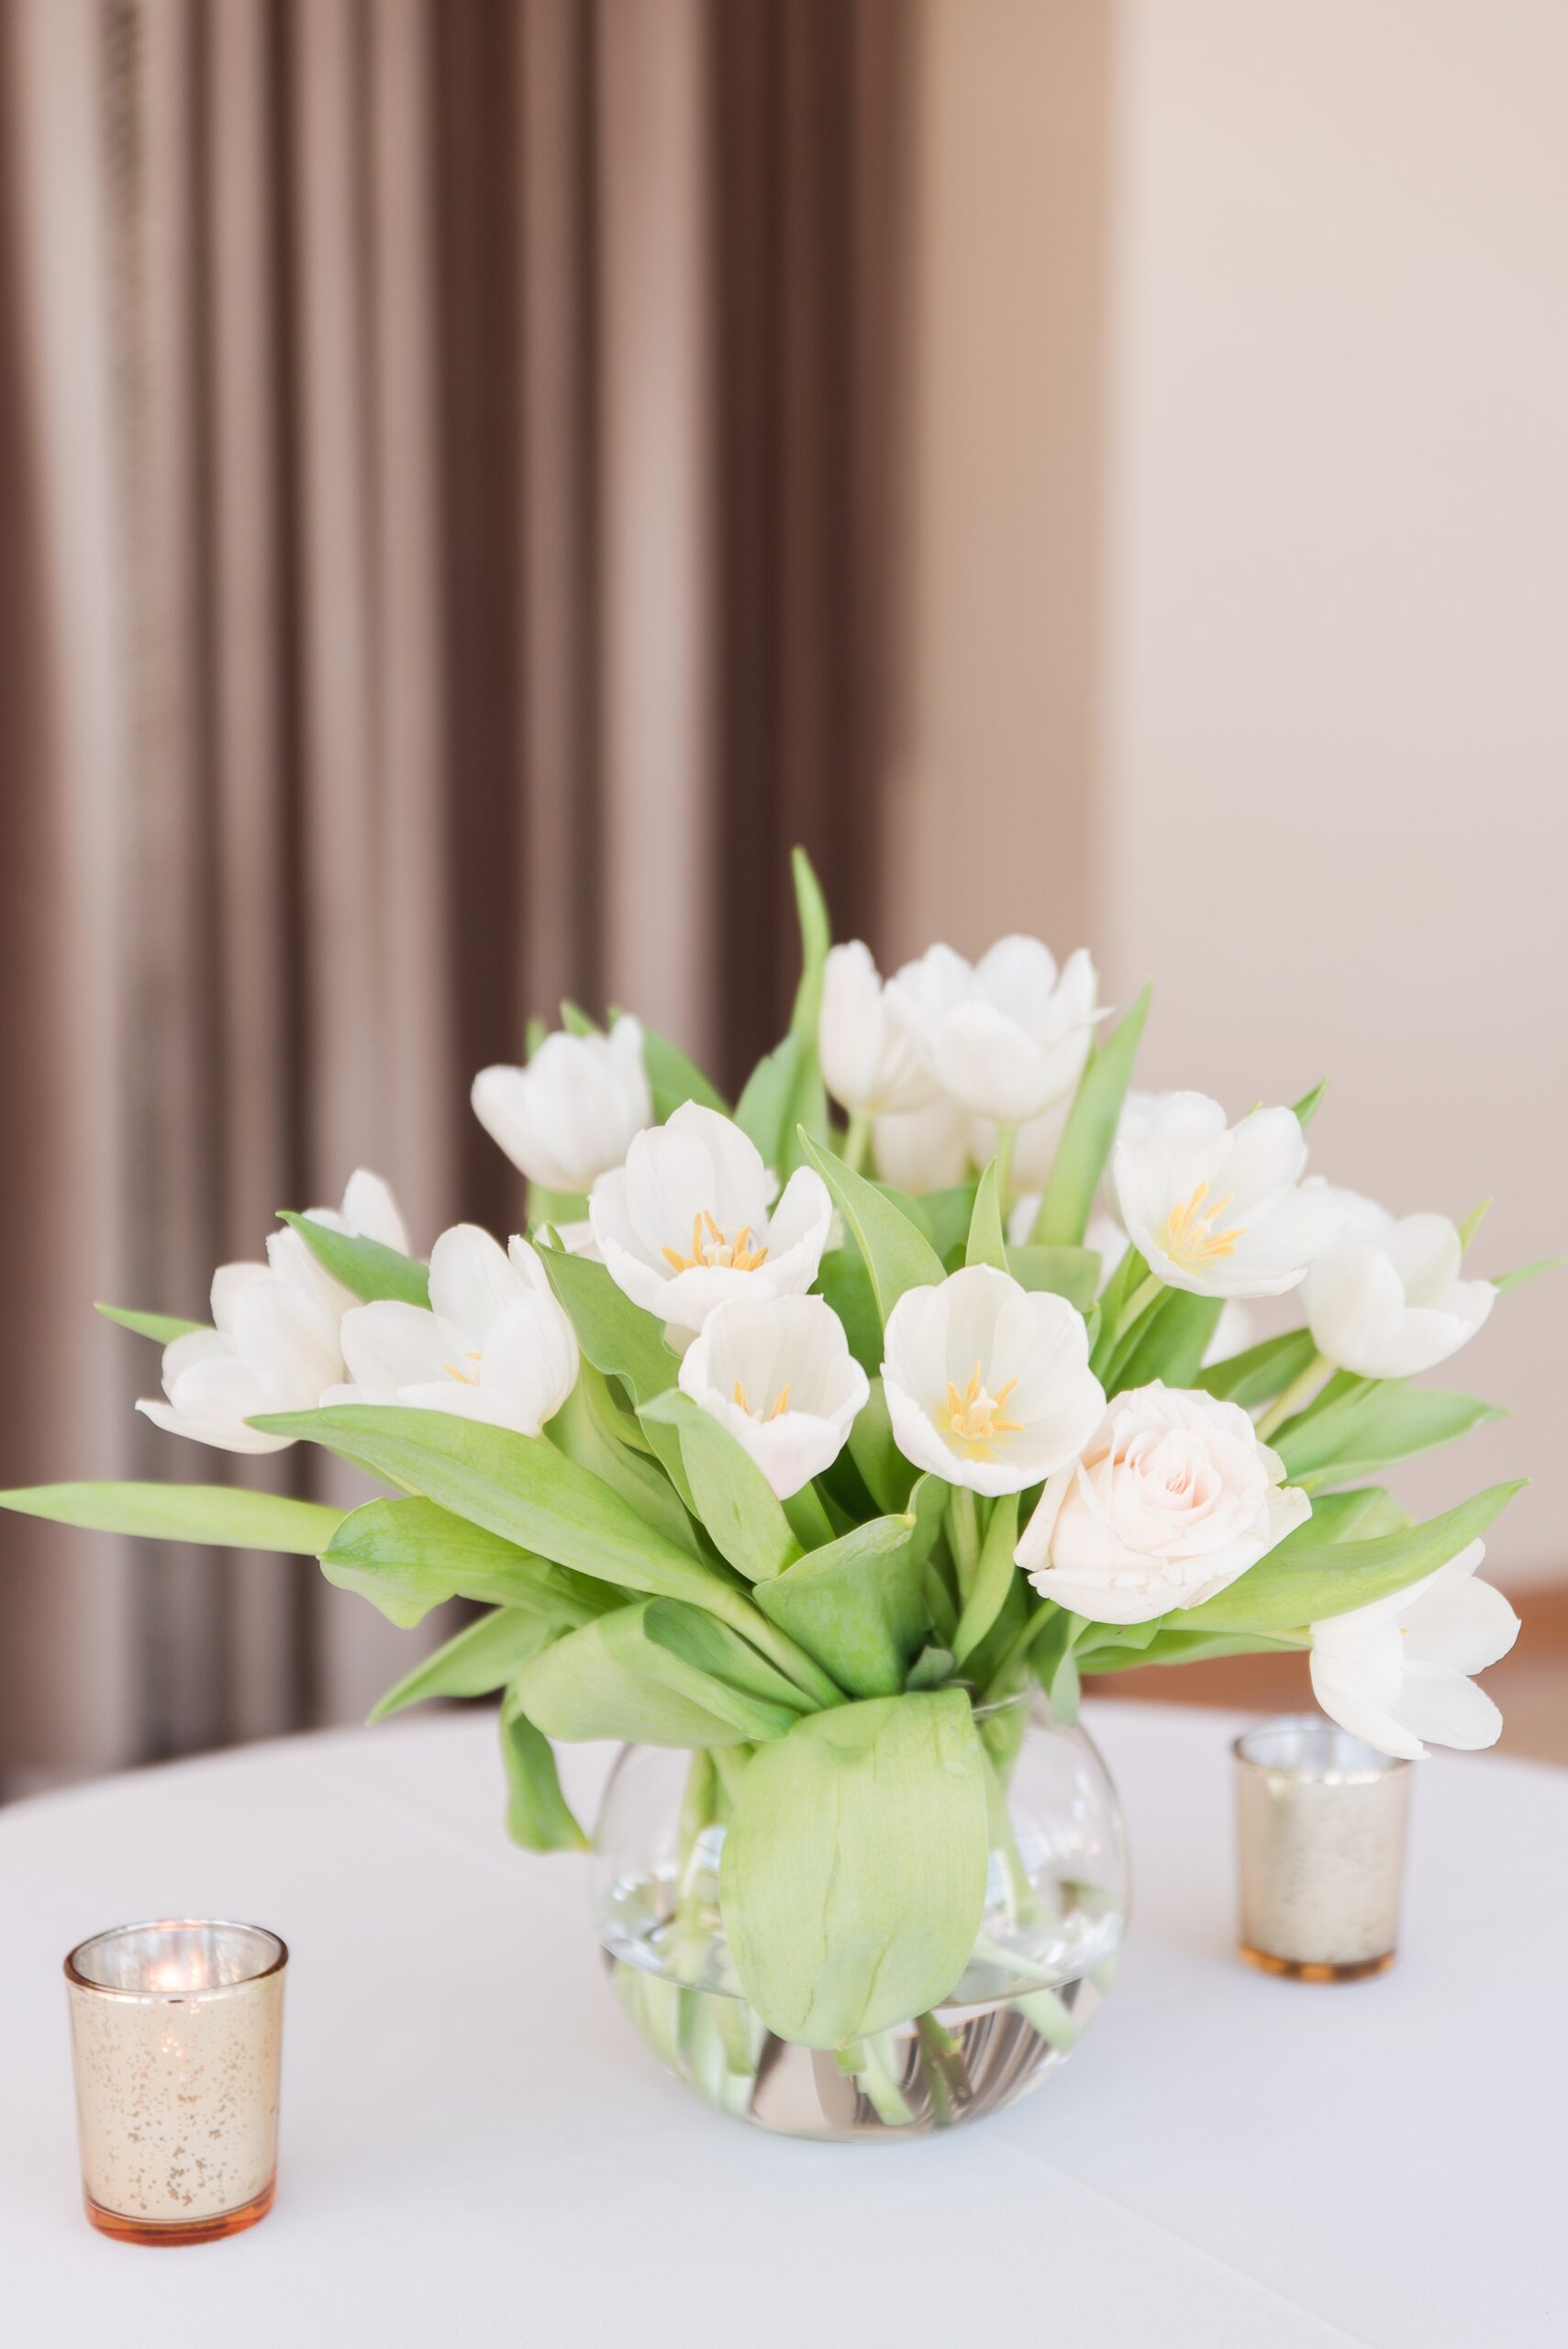 Details of a white tulip wedding reception centerpiece